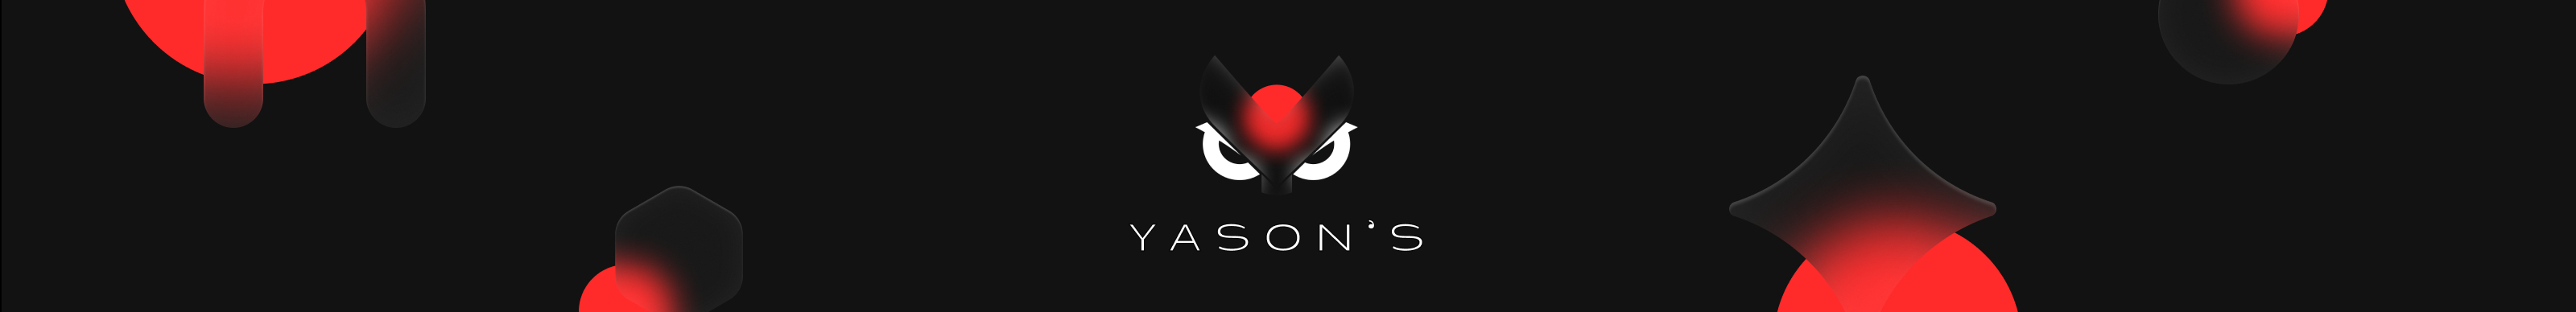 Banner profilu uživatele Yason's Design